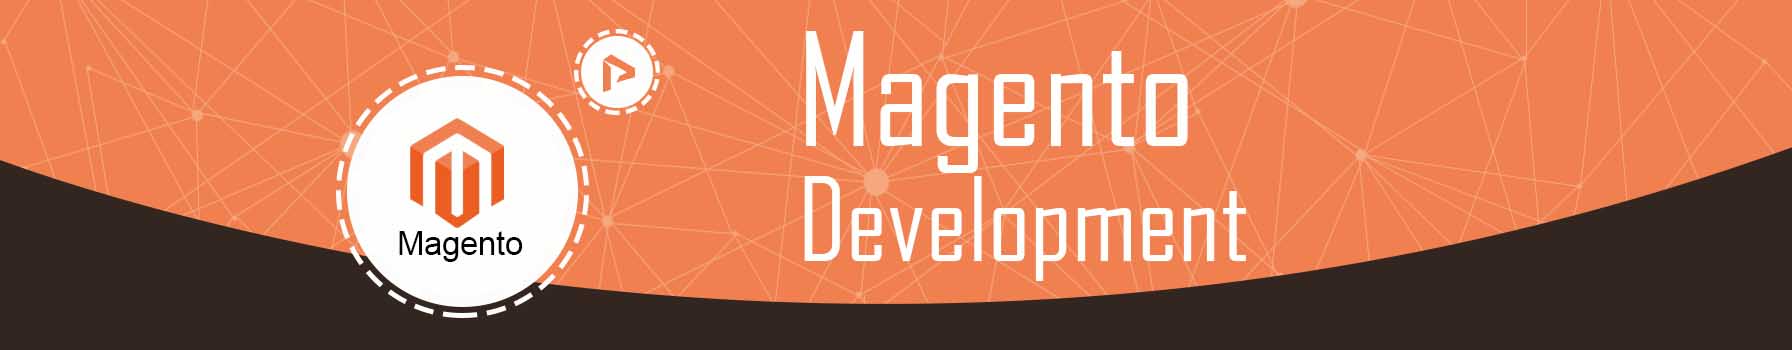 magento-development.jpg